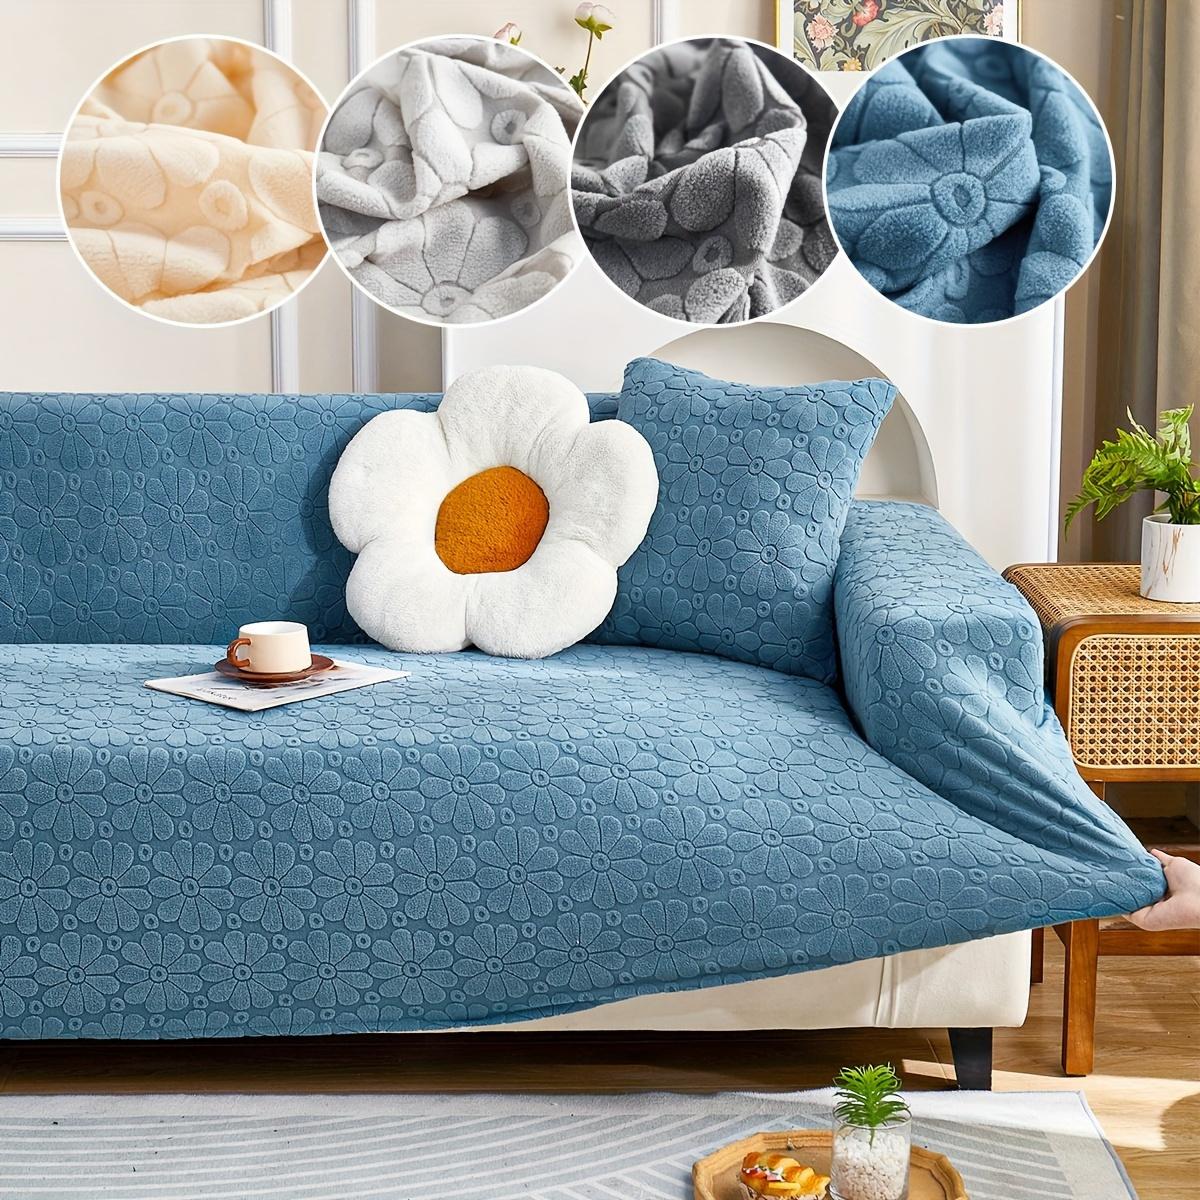 Comprar Funda de sofá para prevención de arañazos de gatos, funda de sofá  Ins de felpa color crema, Color sólido, Jacquard, prevención de arañazos de  gatos, toalla suave para sofá de invierno